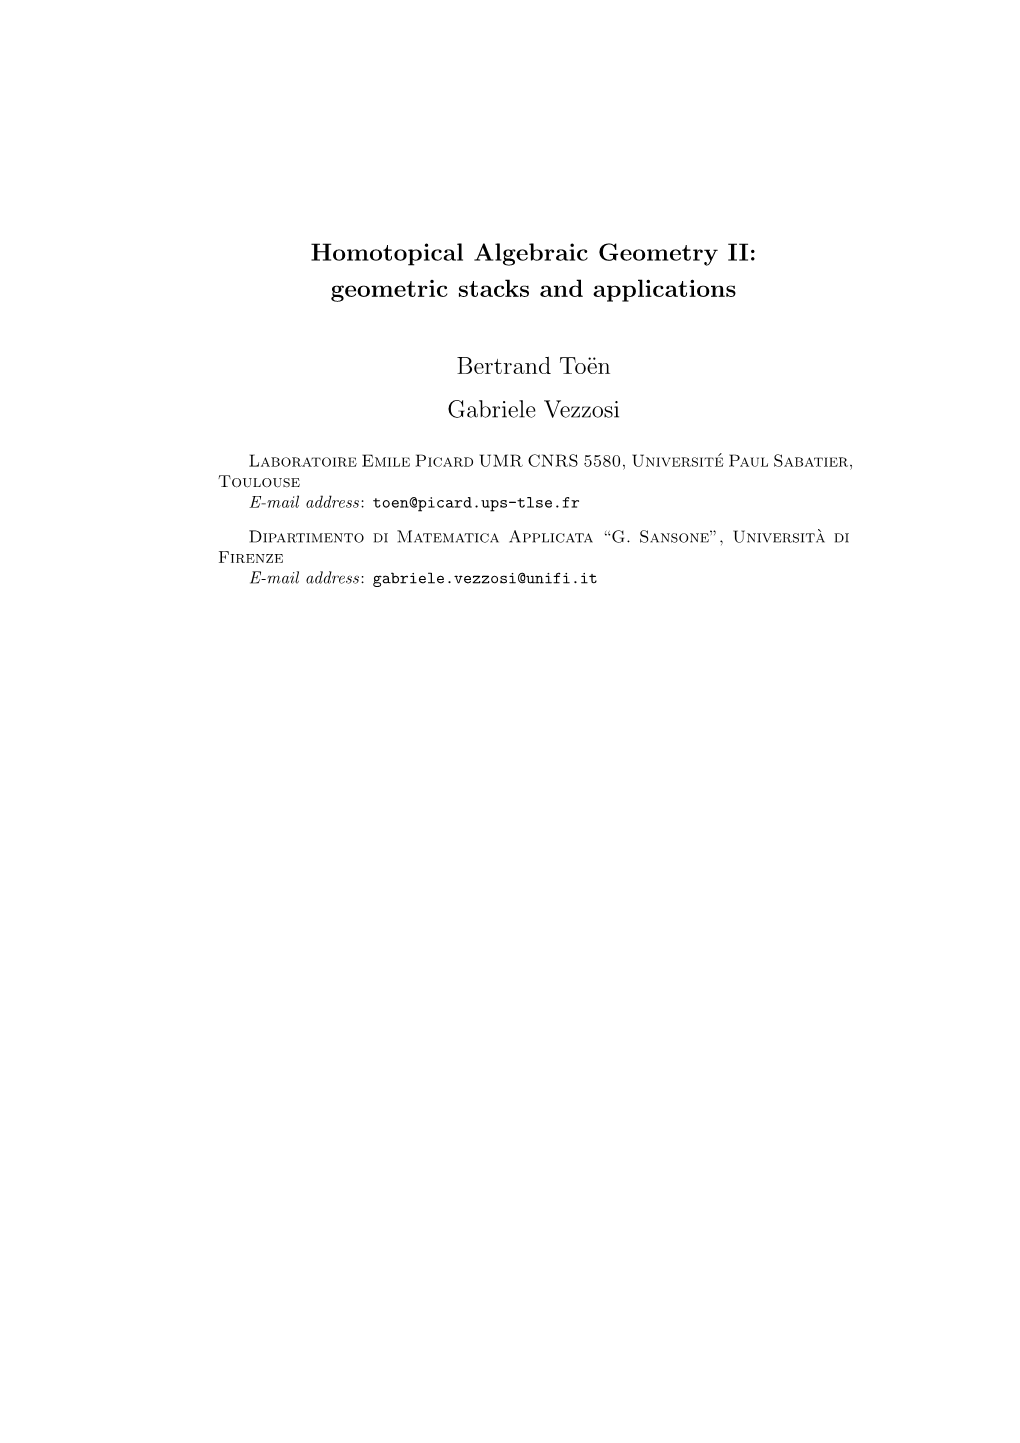 Homotopical Algebraic Geometry II: Geometric Stacks and Applications